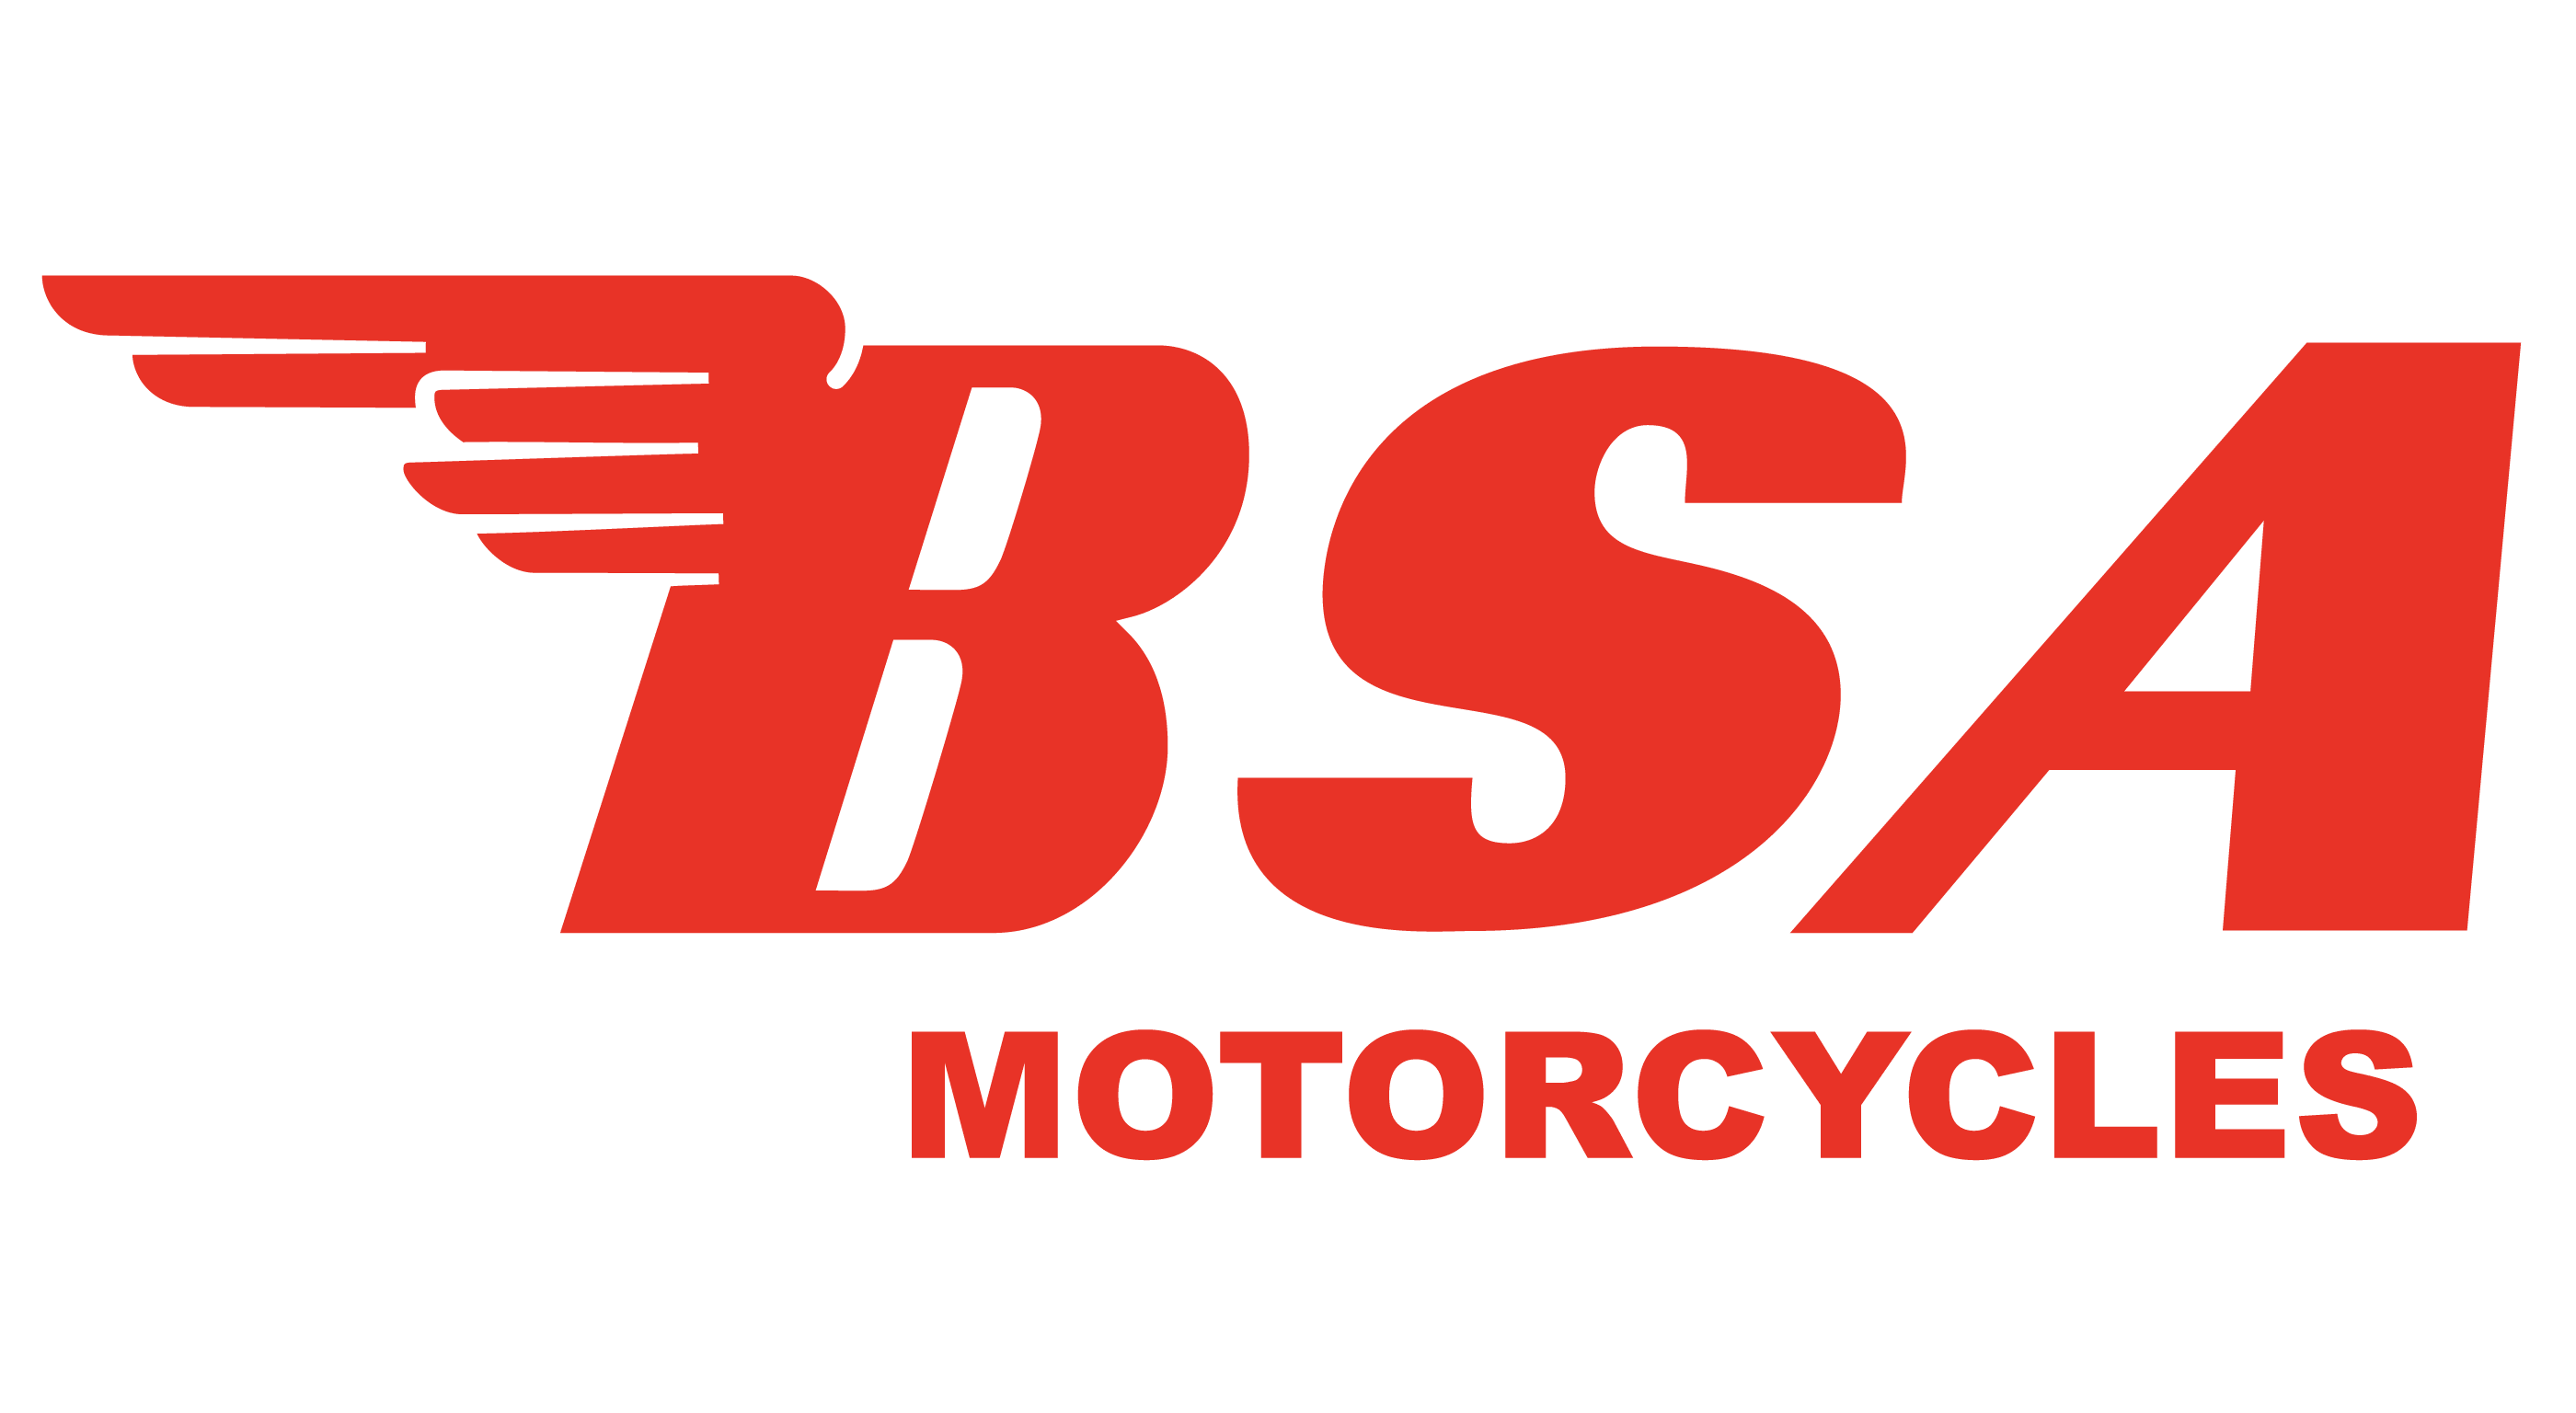 Motorcycle Company Logo - BSA Logo Motorcycles | Motorcycle Logos | Pinterest | Motorcycle ...